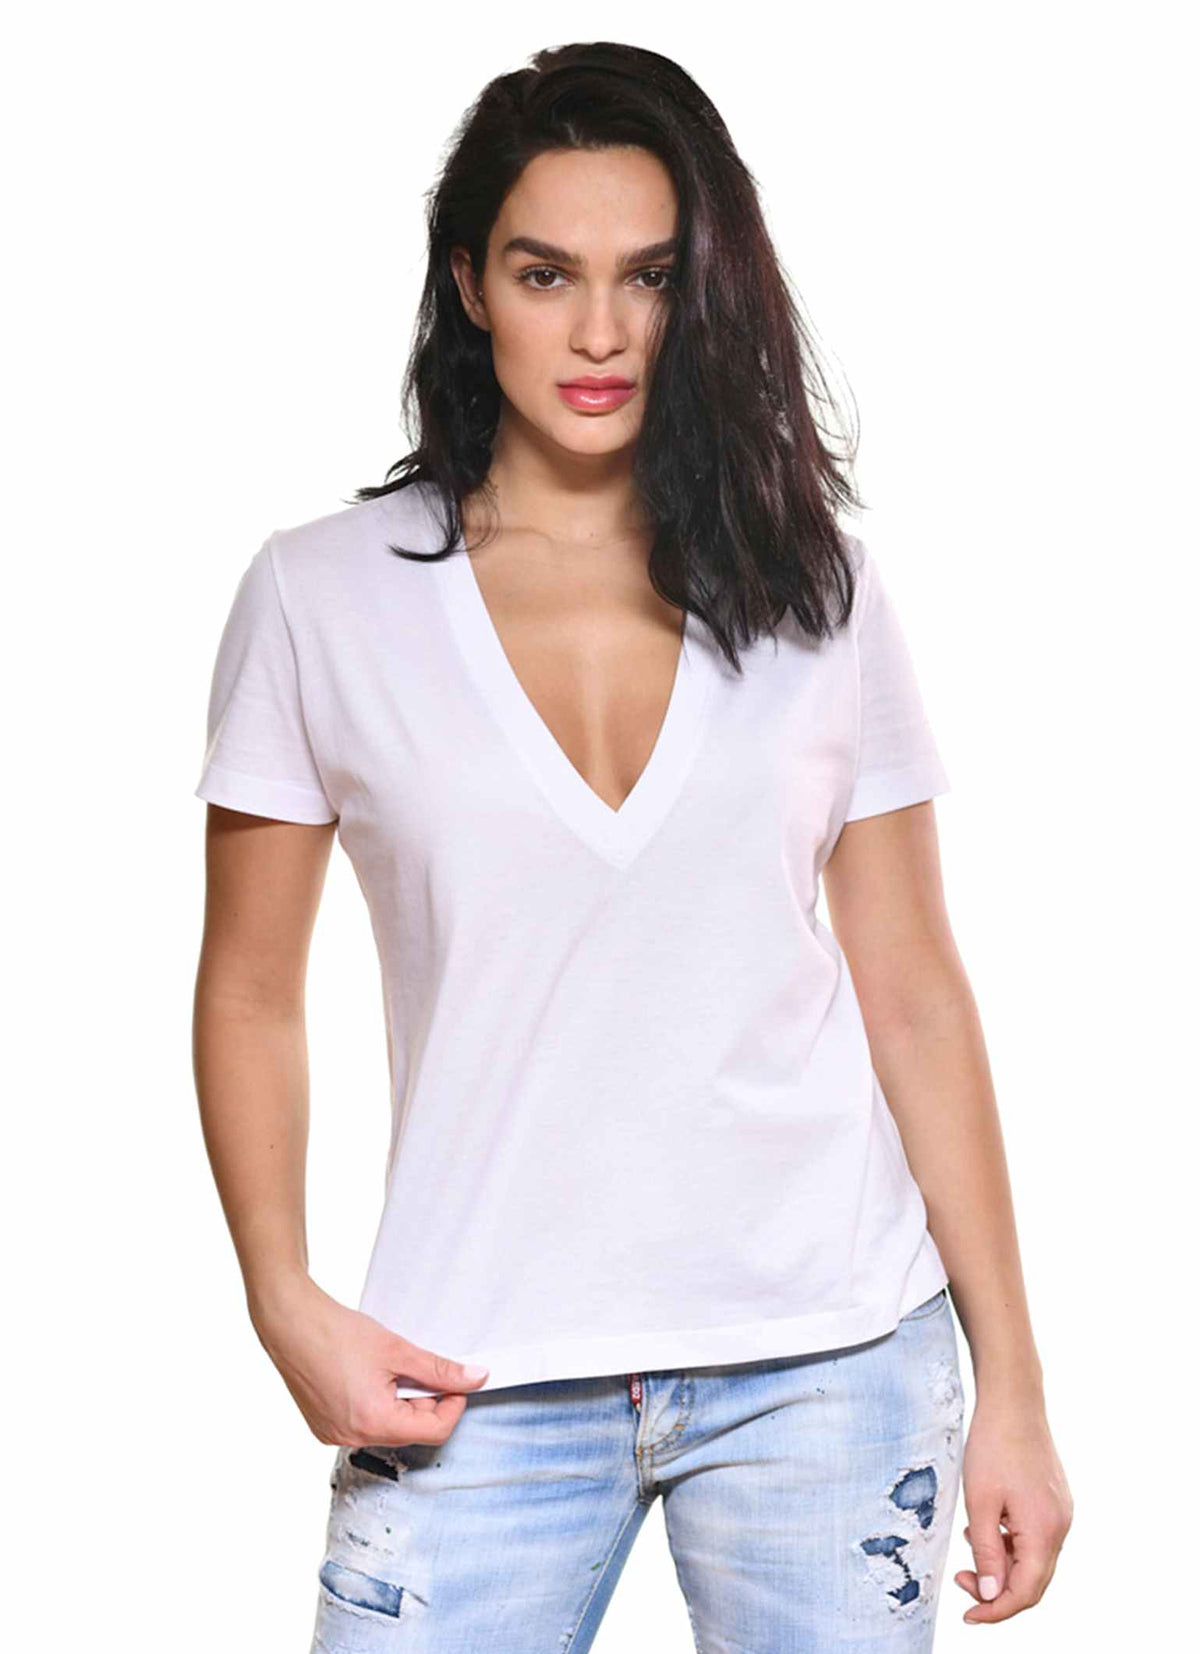 Women wearing Carmen Sol tee shirts for women in color white